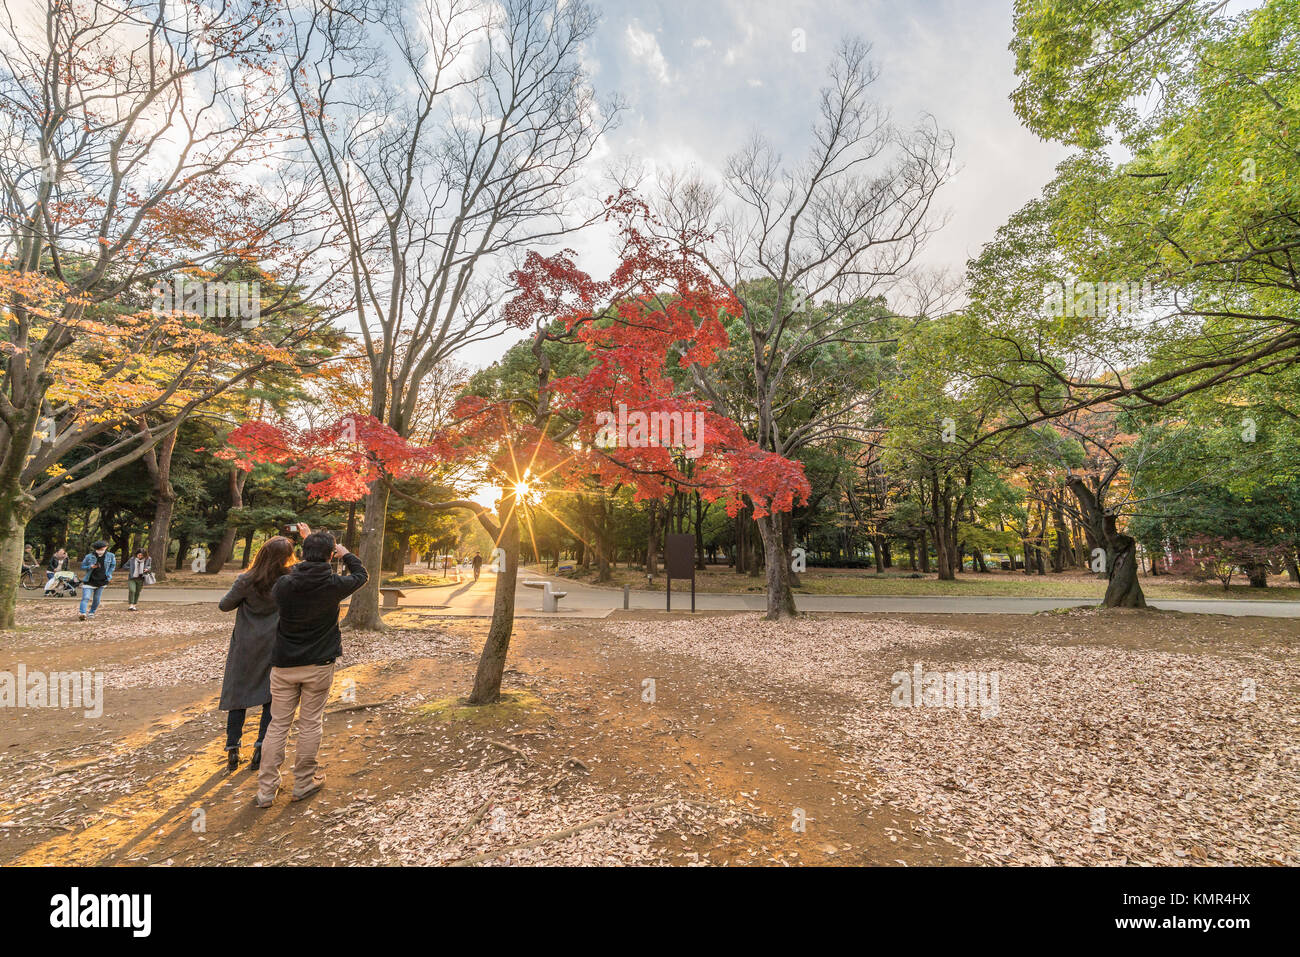 A couple making pictures of Momiji (maple tree) Autumn colors, Fall foliage sunset at Yoyogi Park (代々木公園), Shibuya ward, Tokyo, Japan. Stock Photo